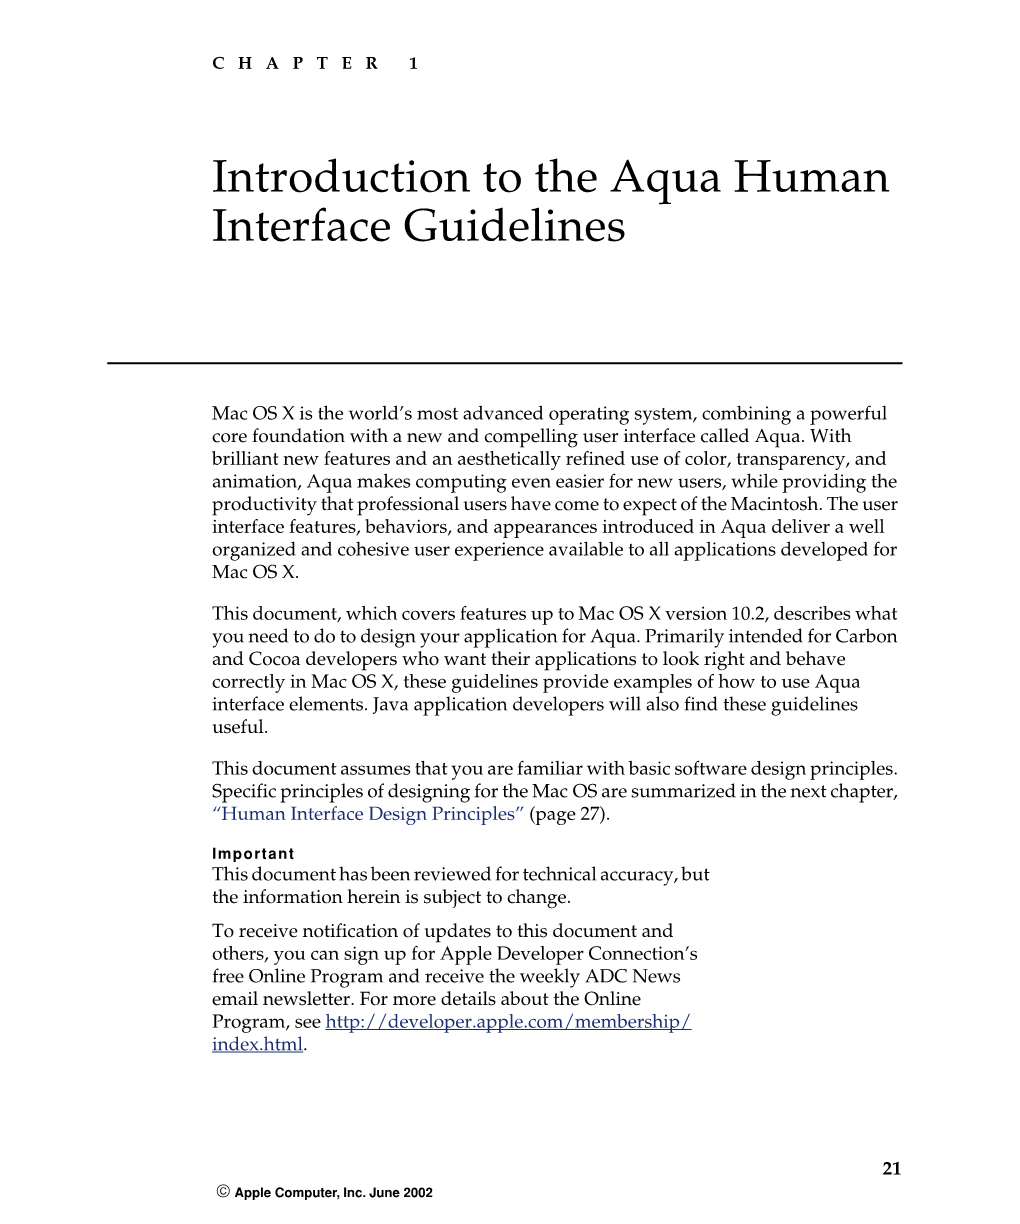 Aqua Human Interface Guidelines